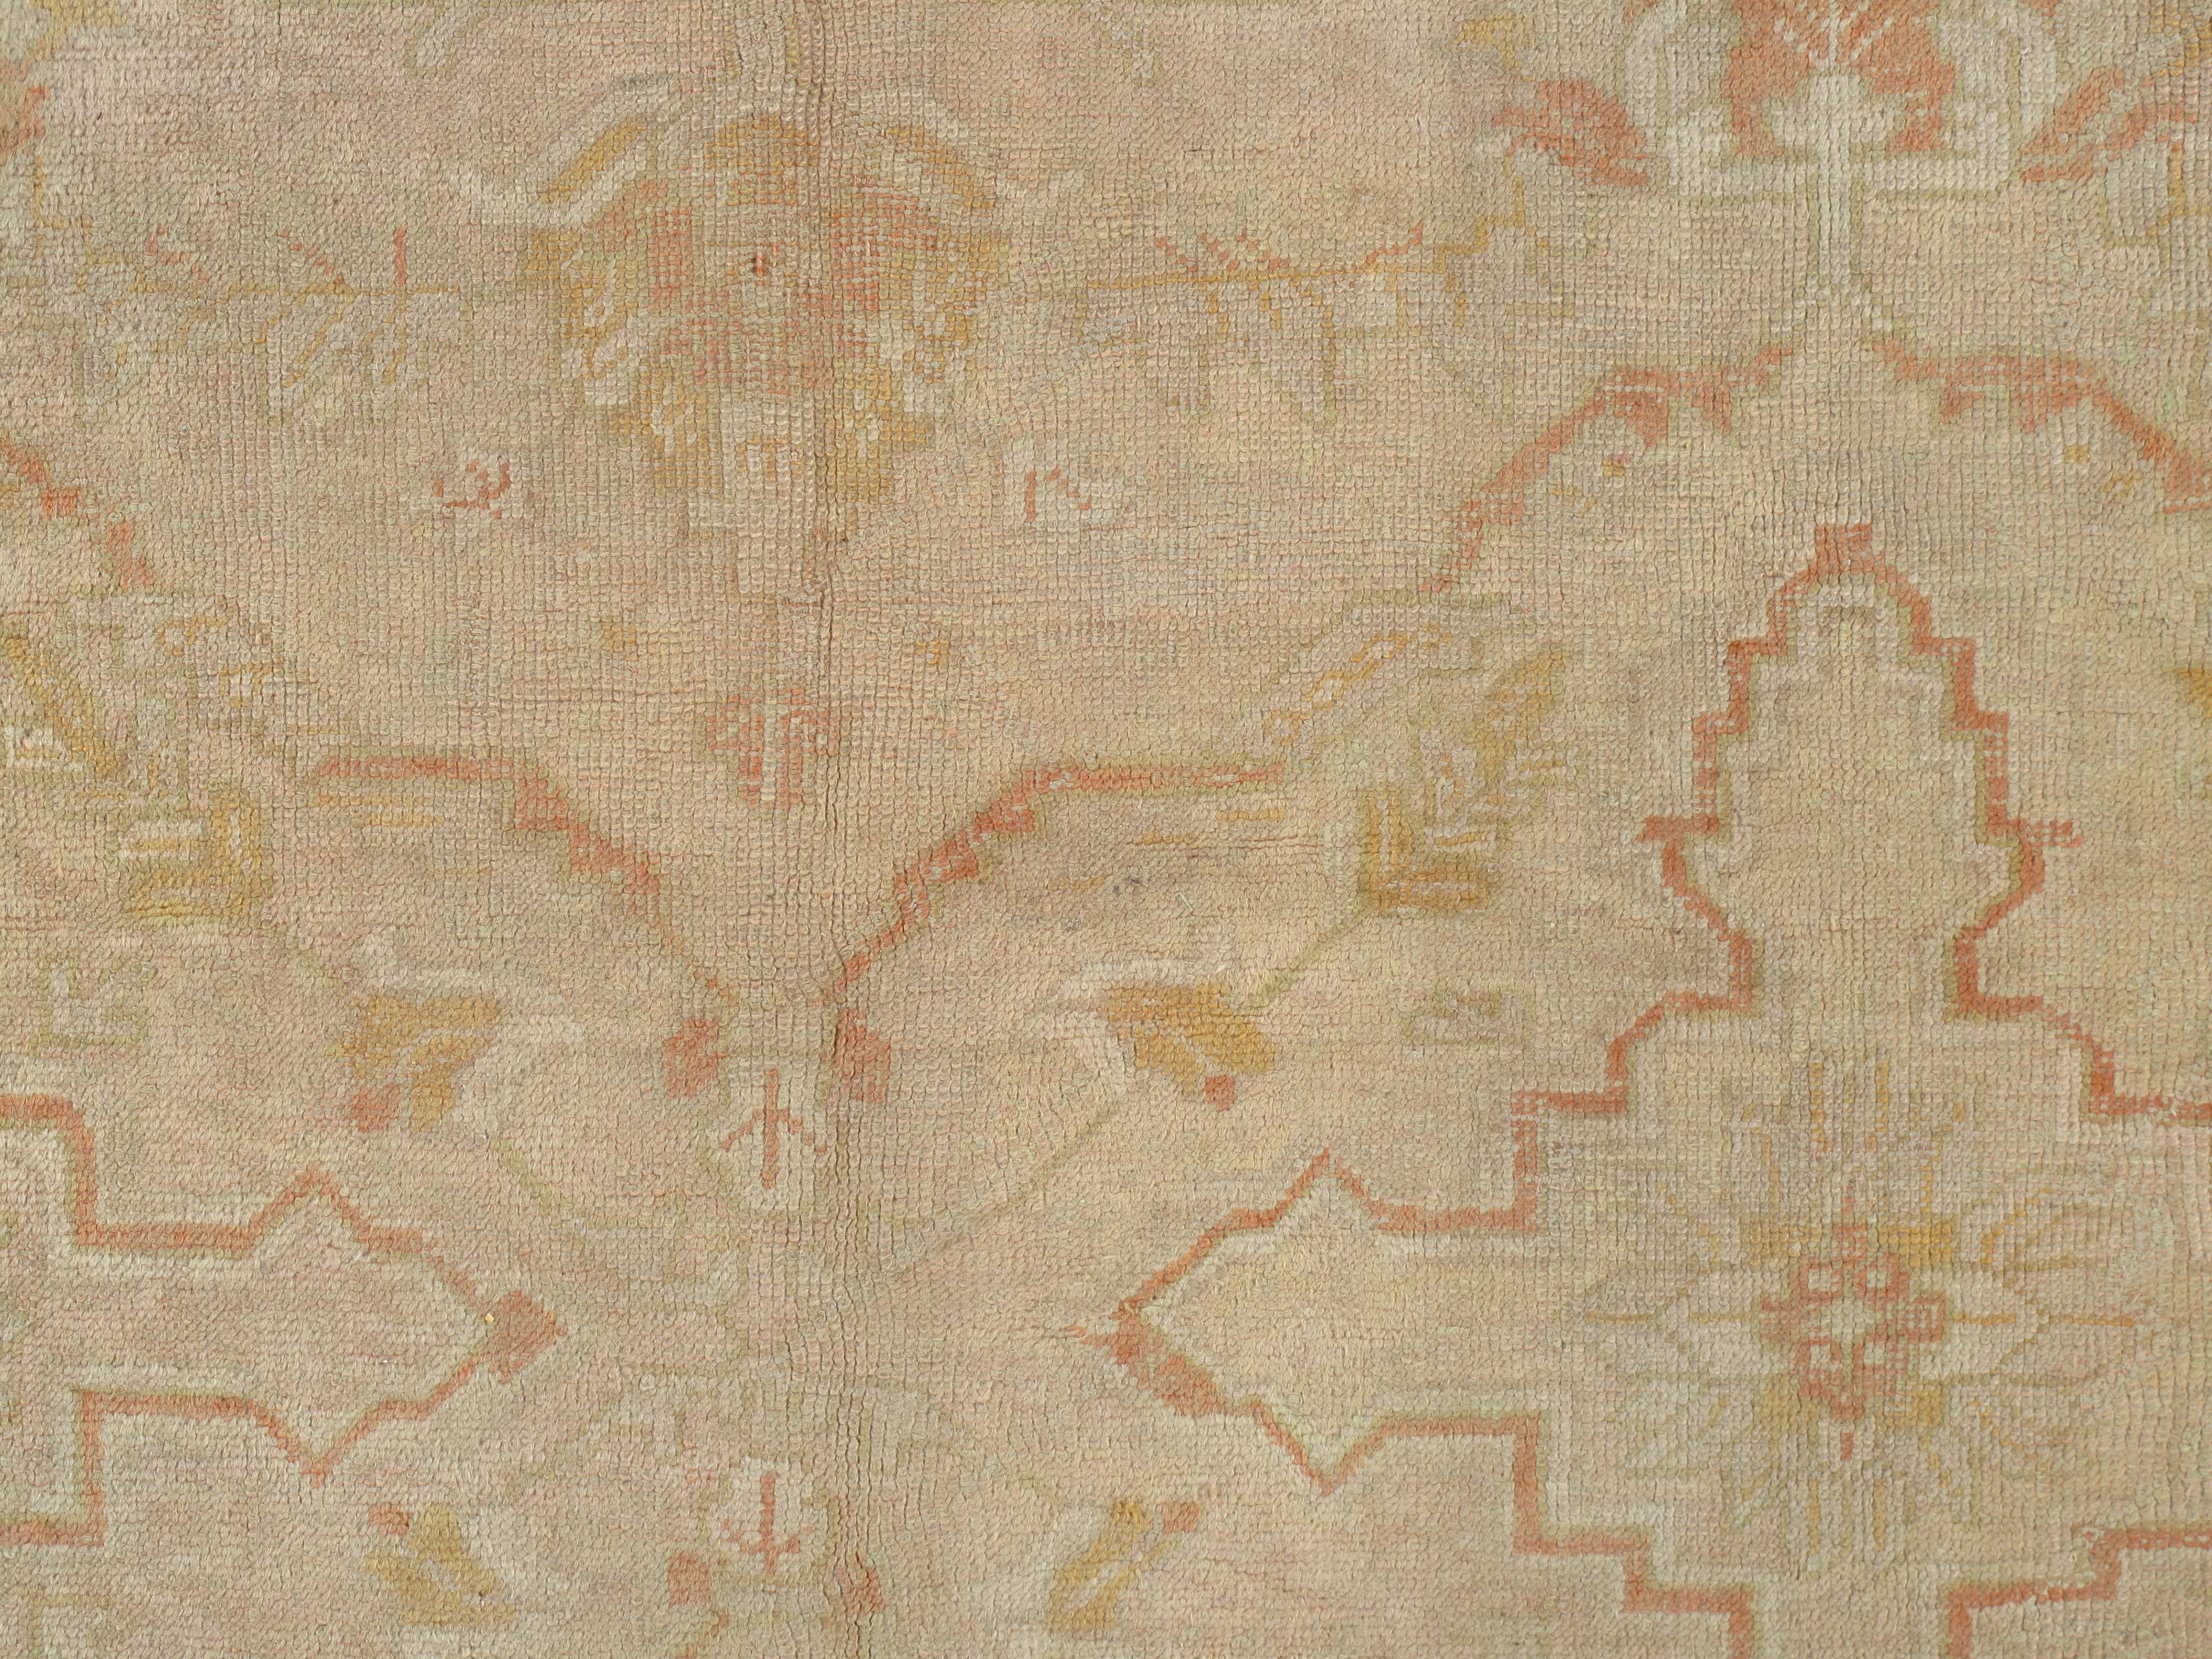 Antique Oushak Carpet, Handmade Turkish Oriental Rug, Beige, Taupe, Soft Shrimp In Good Condition For Sale In Port Washington, NY